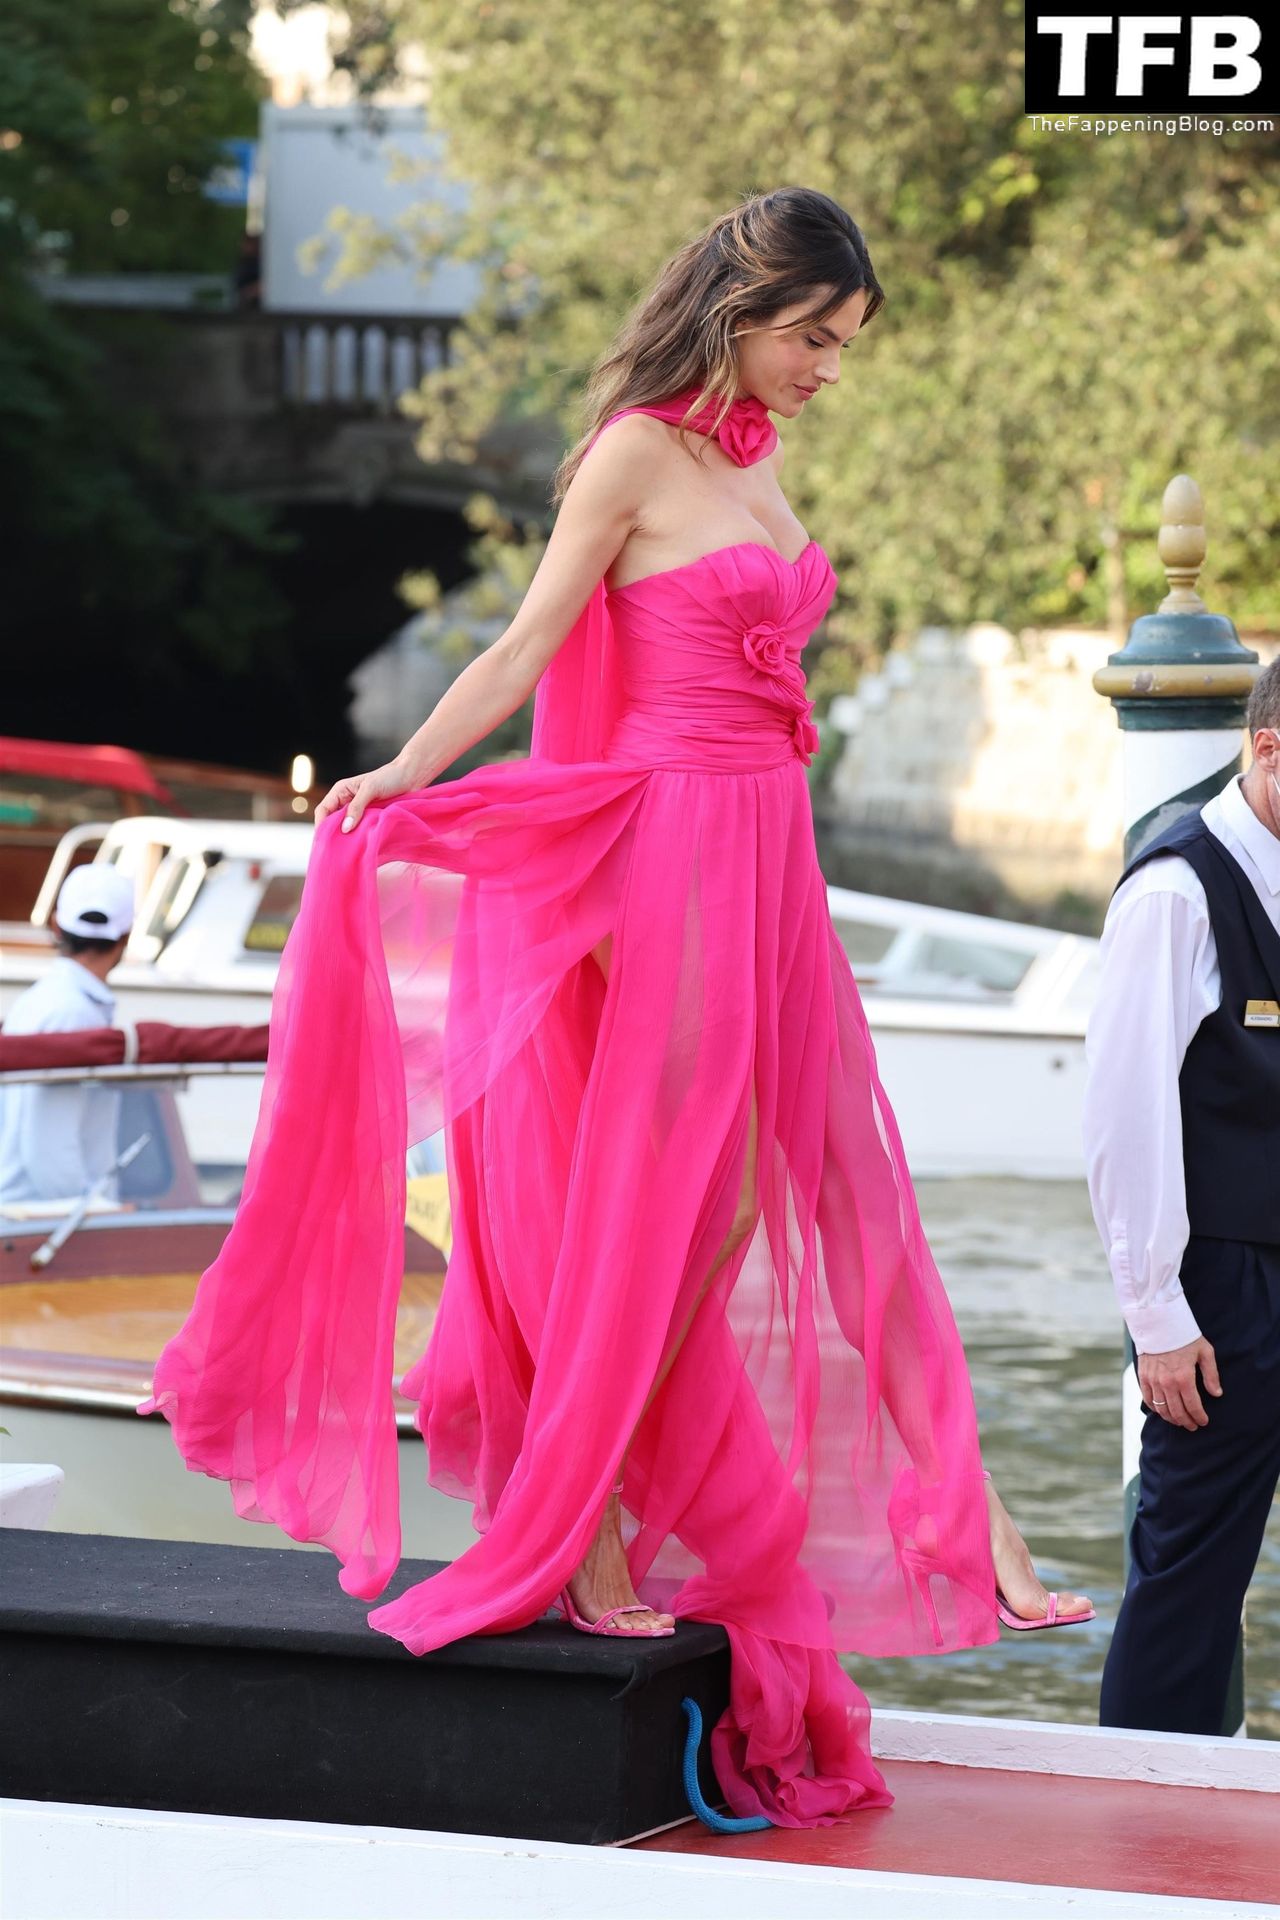 Alessandra Ambrosio Looks Stunning at the 79th Venice International Film Festival (152 Photos)